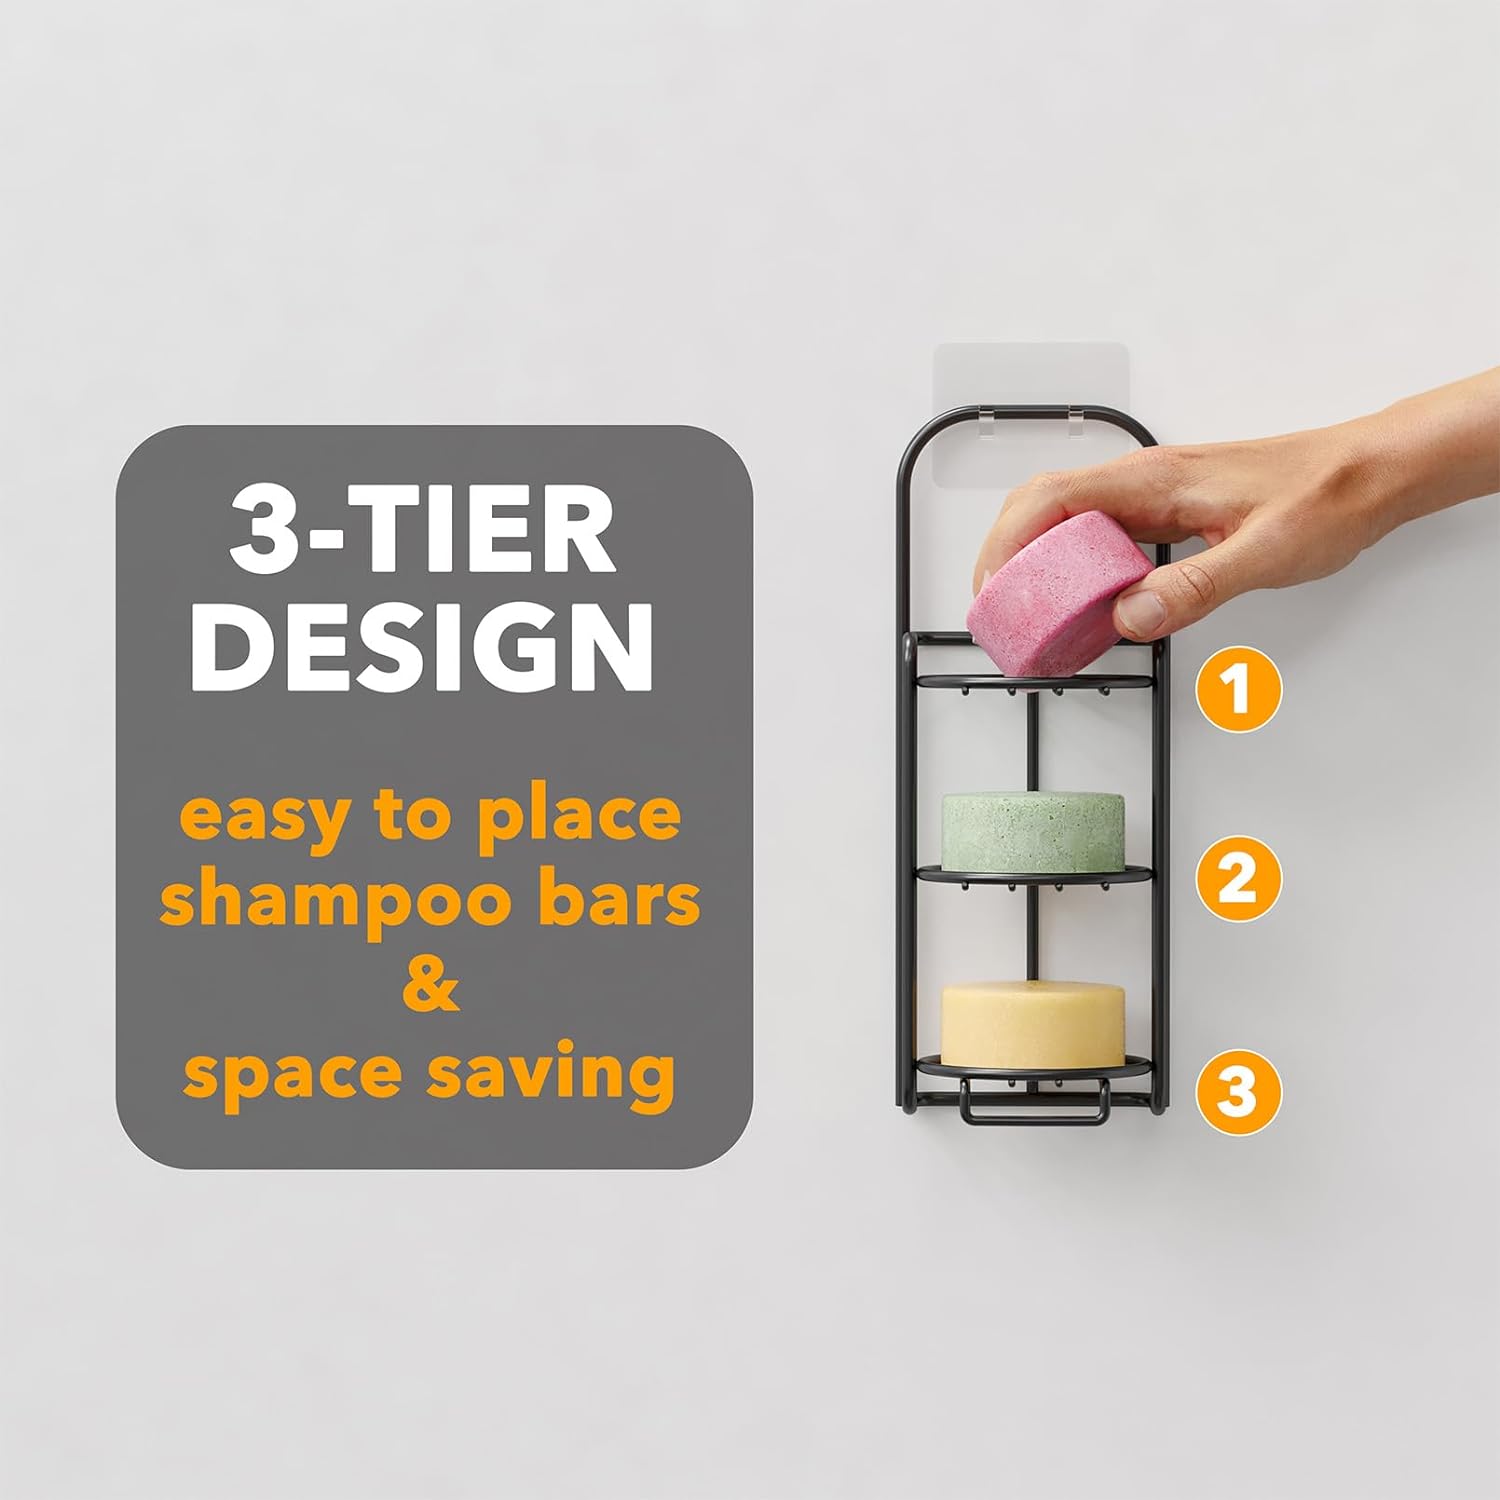 SpaceAid Black 3 Tier Shampoo Bar Holder for Shower 61zzCN4Q-xL._AC_SL1500